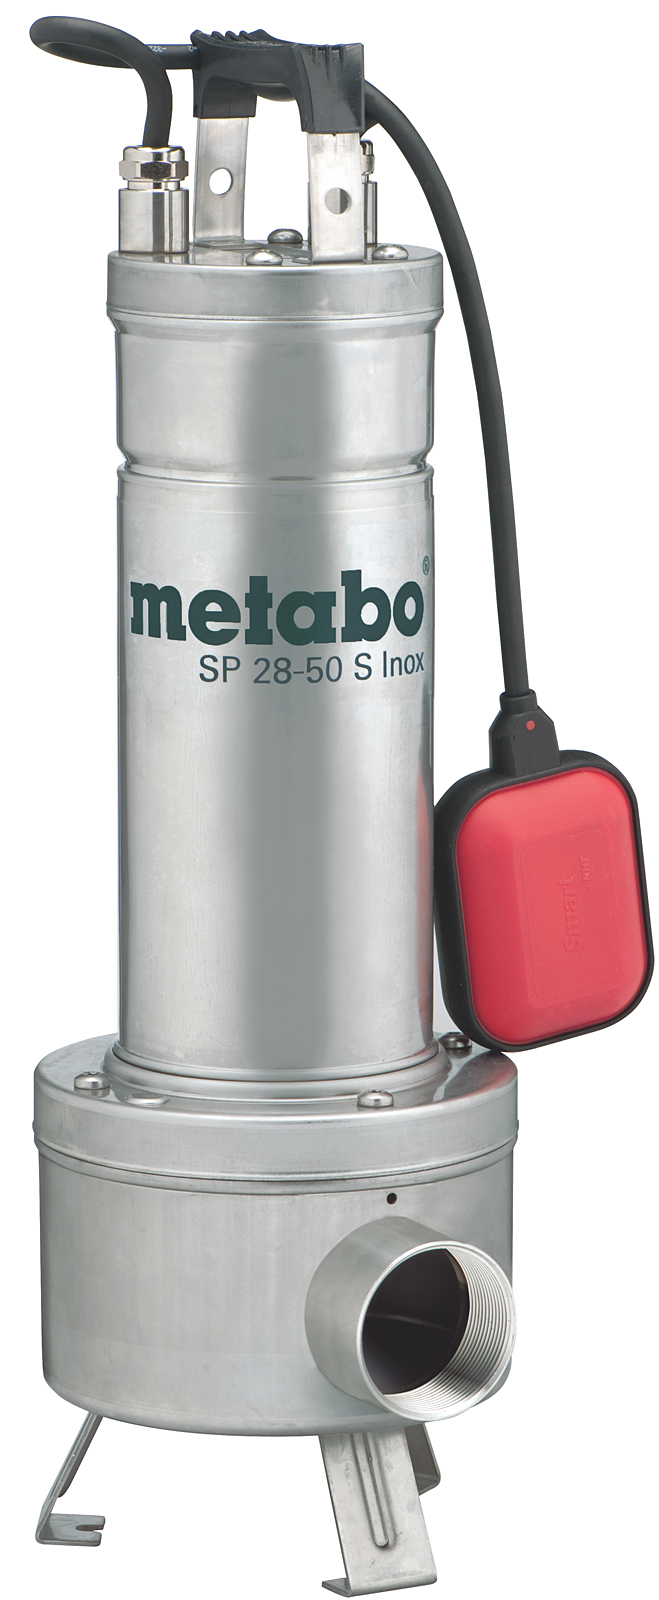 Дренажный насос Metabo Sp 28-50 s inox